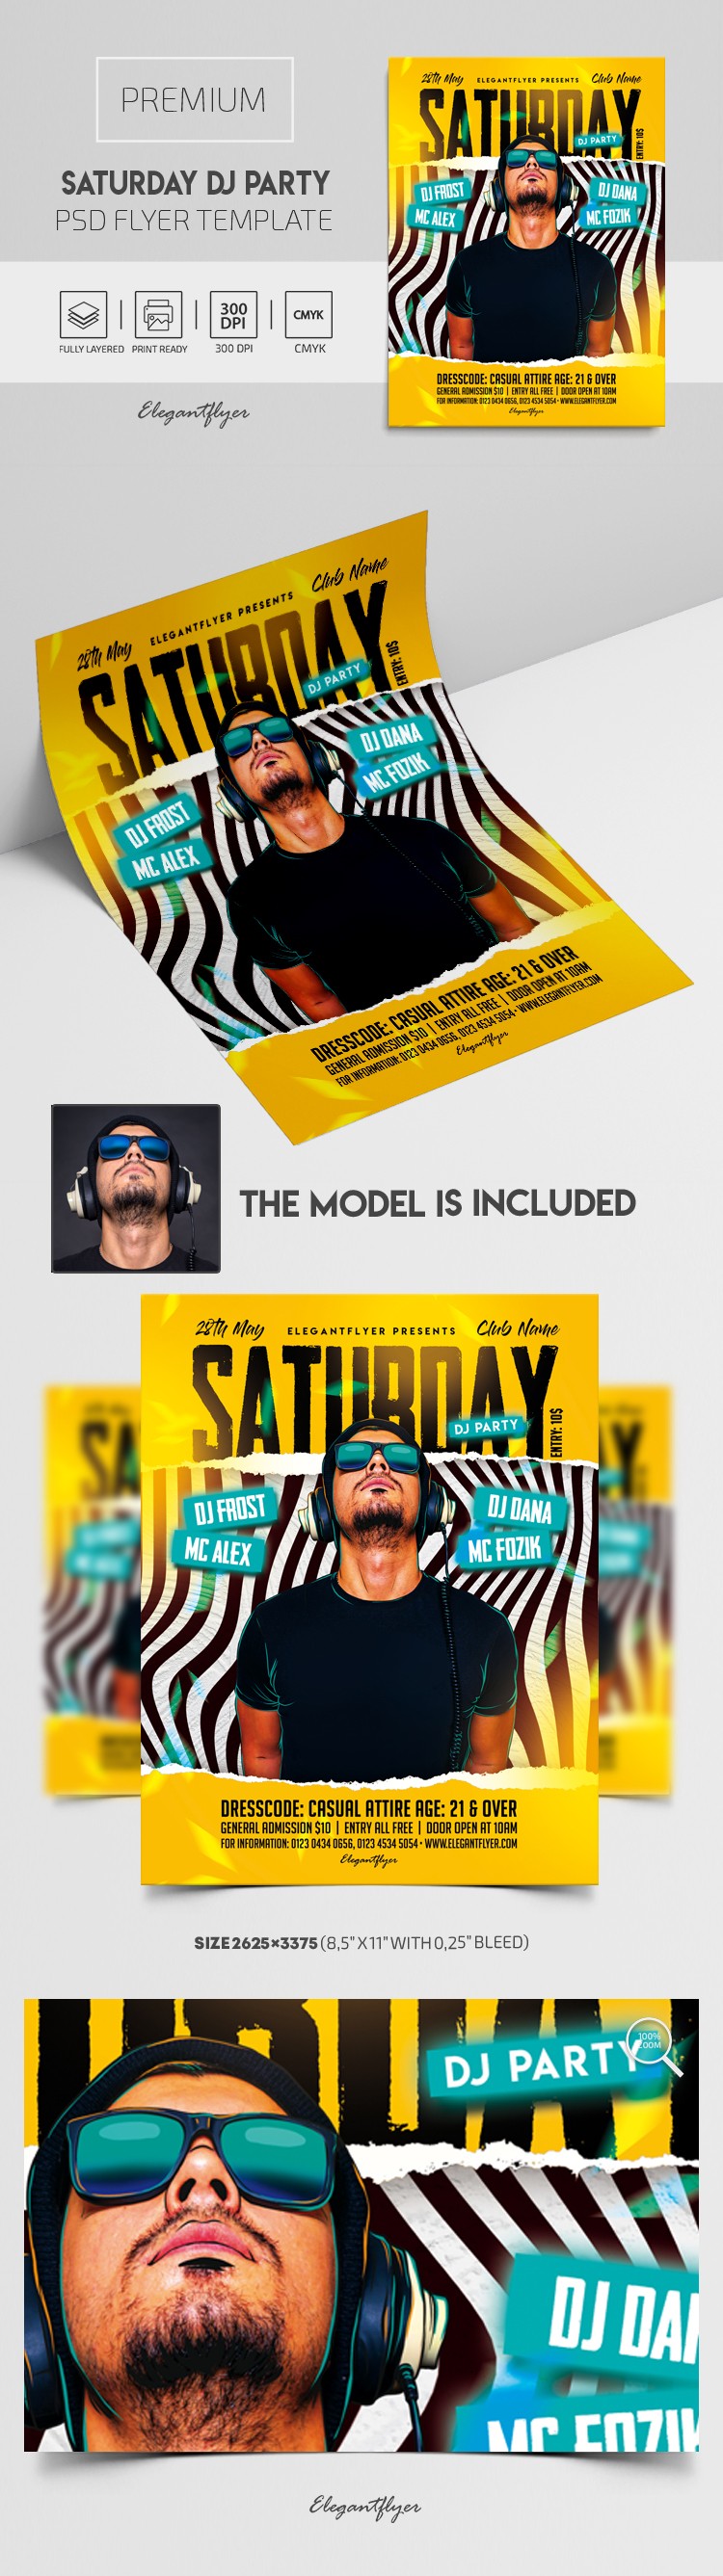 Saturday DJ Party Flyer by ElegantFlyer